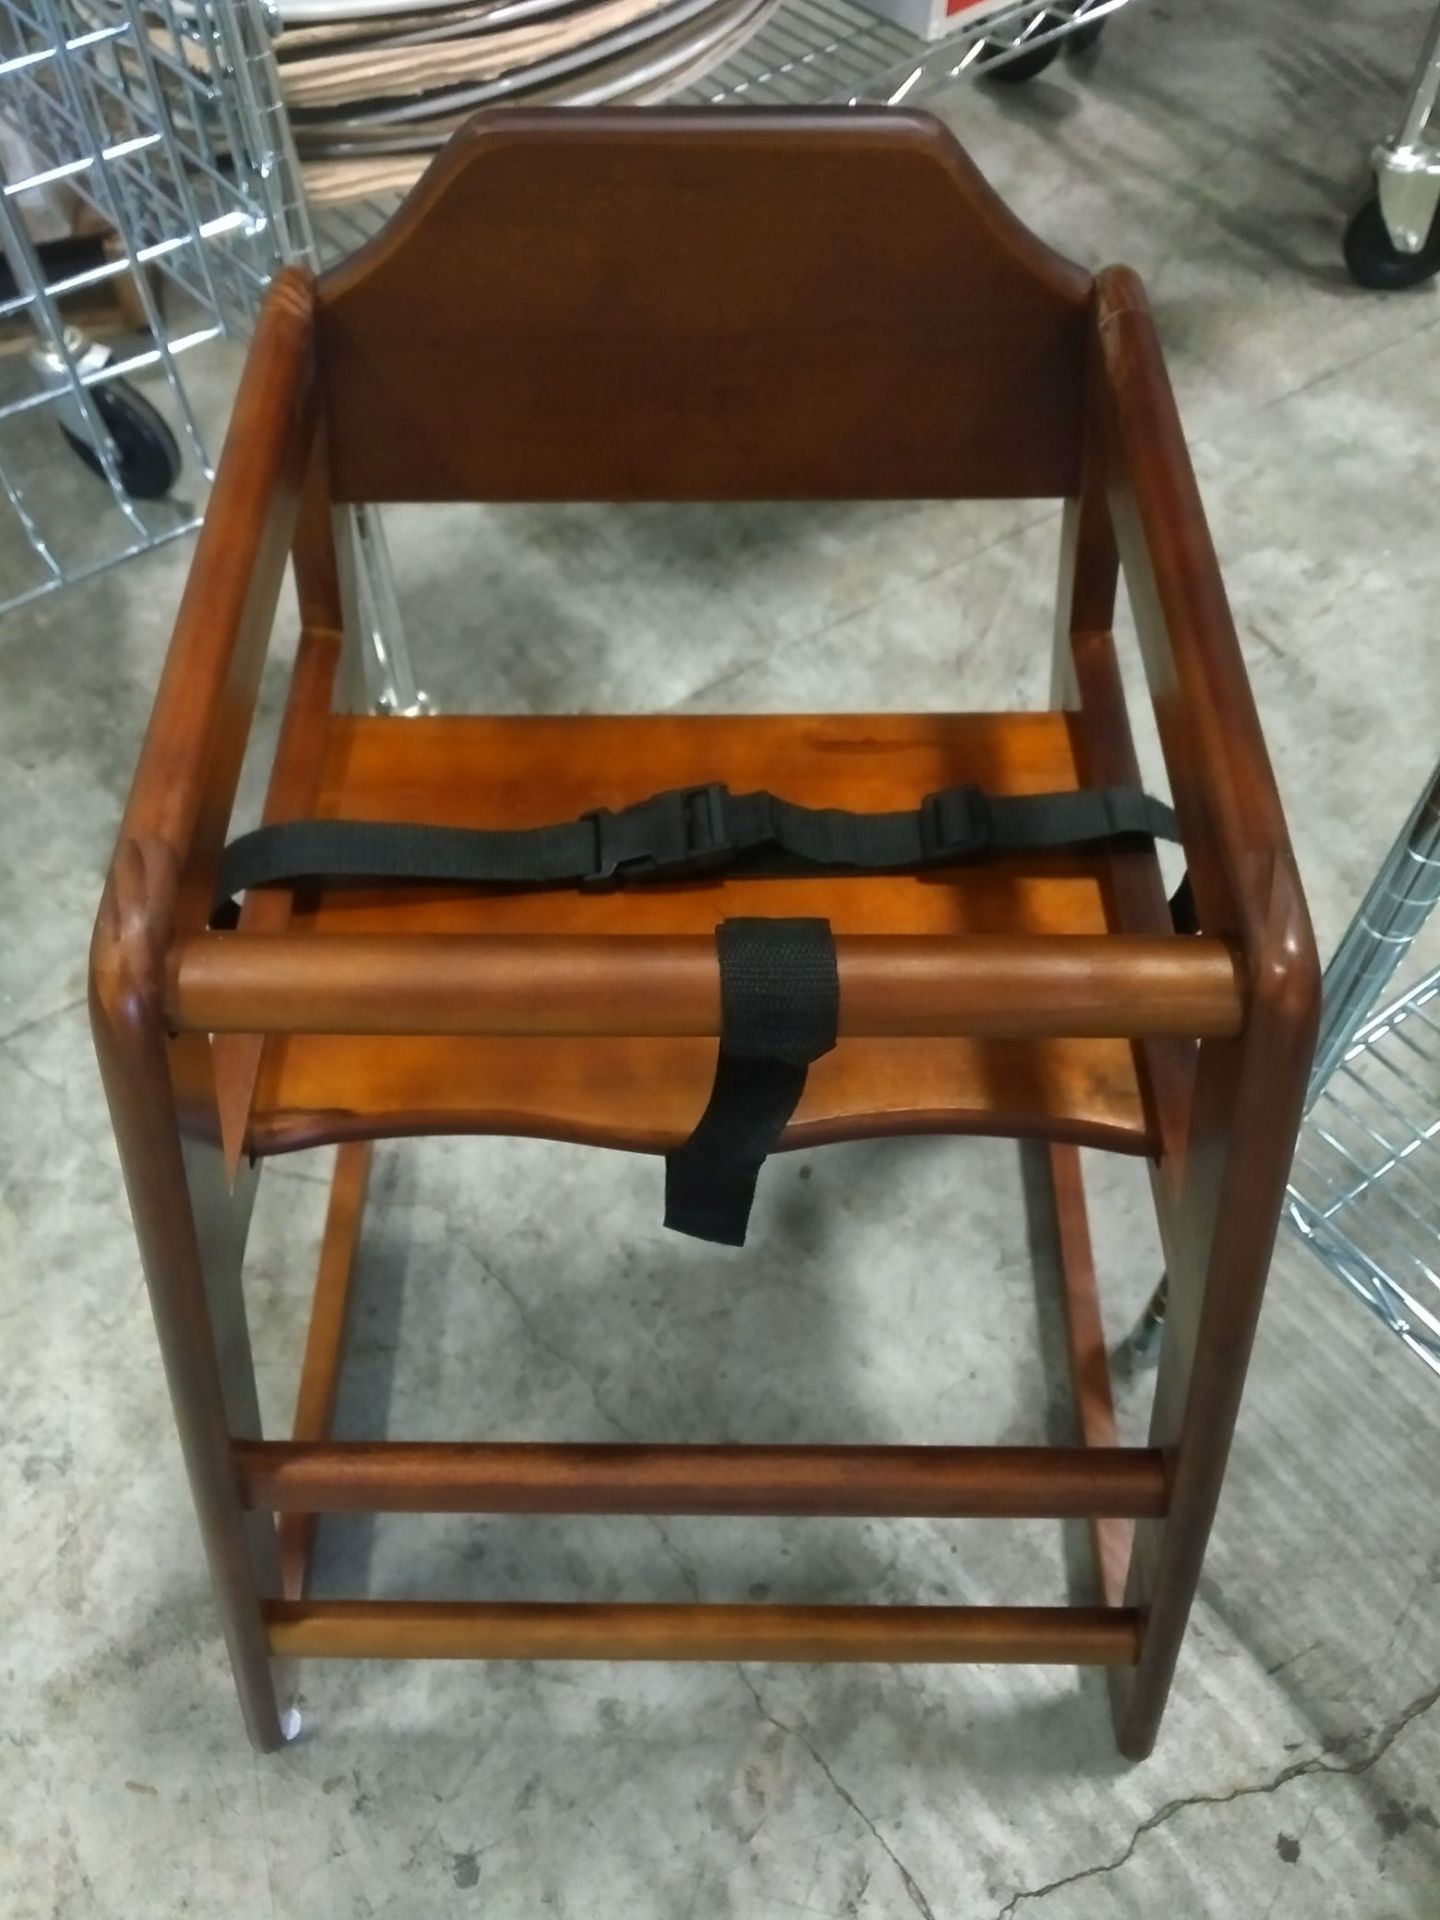 Walnut High Chair - Johnson Rose 4506 - Image 2 of 2